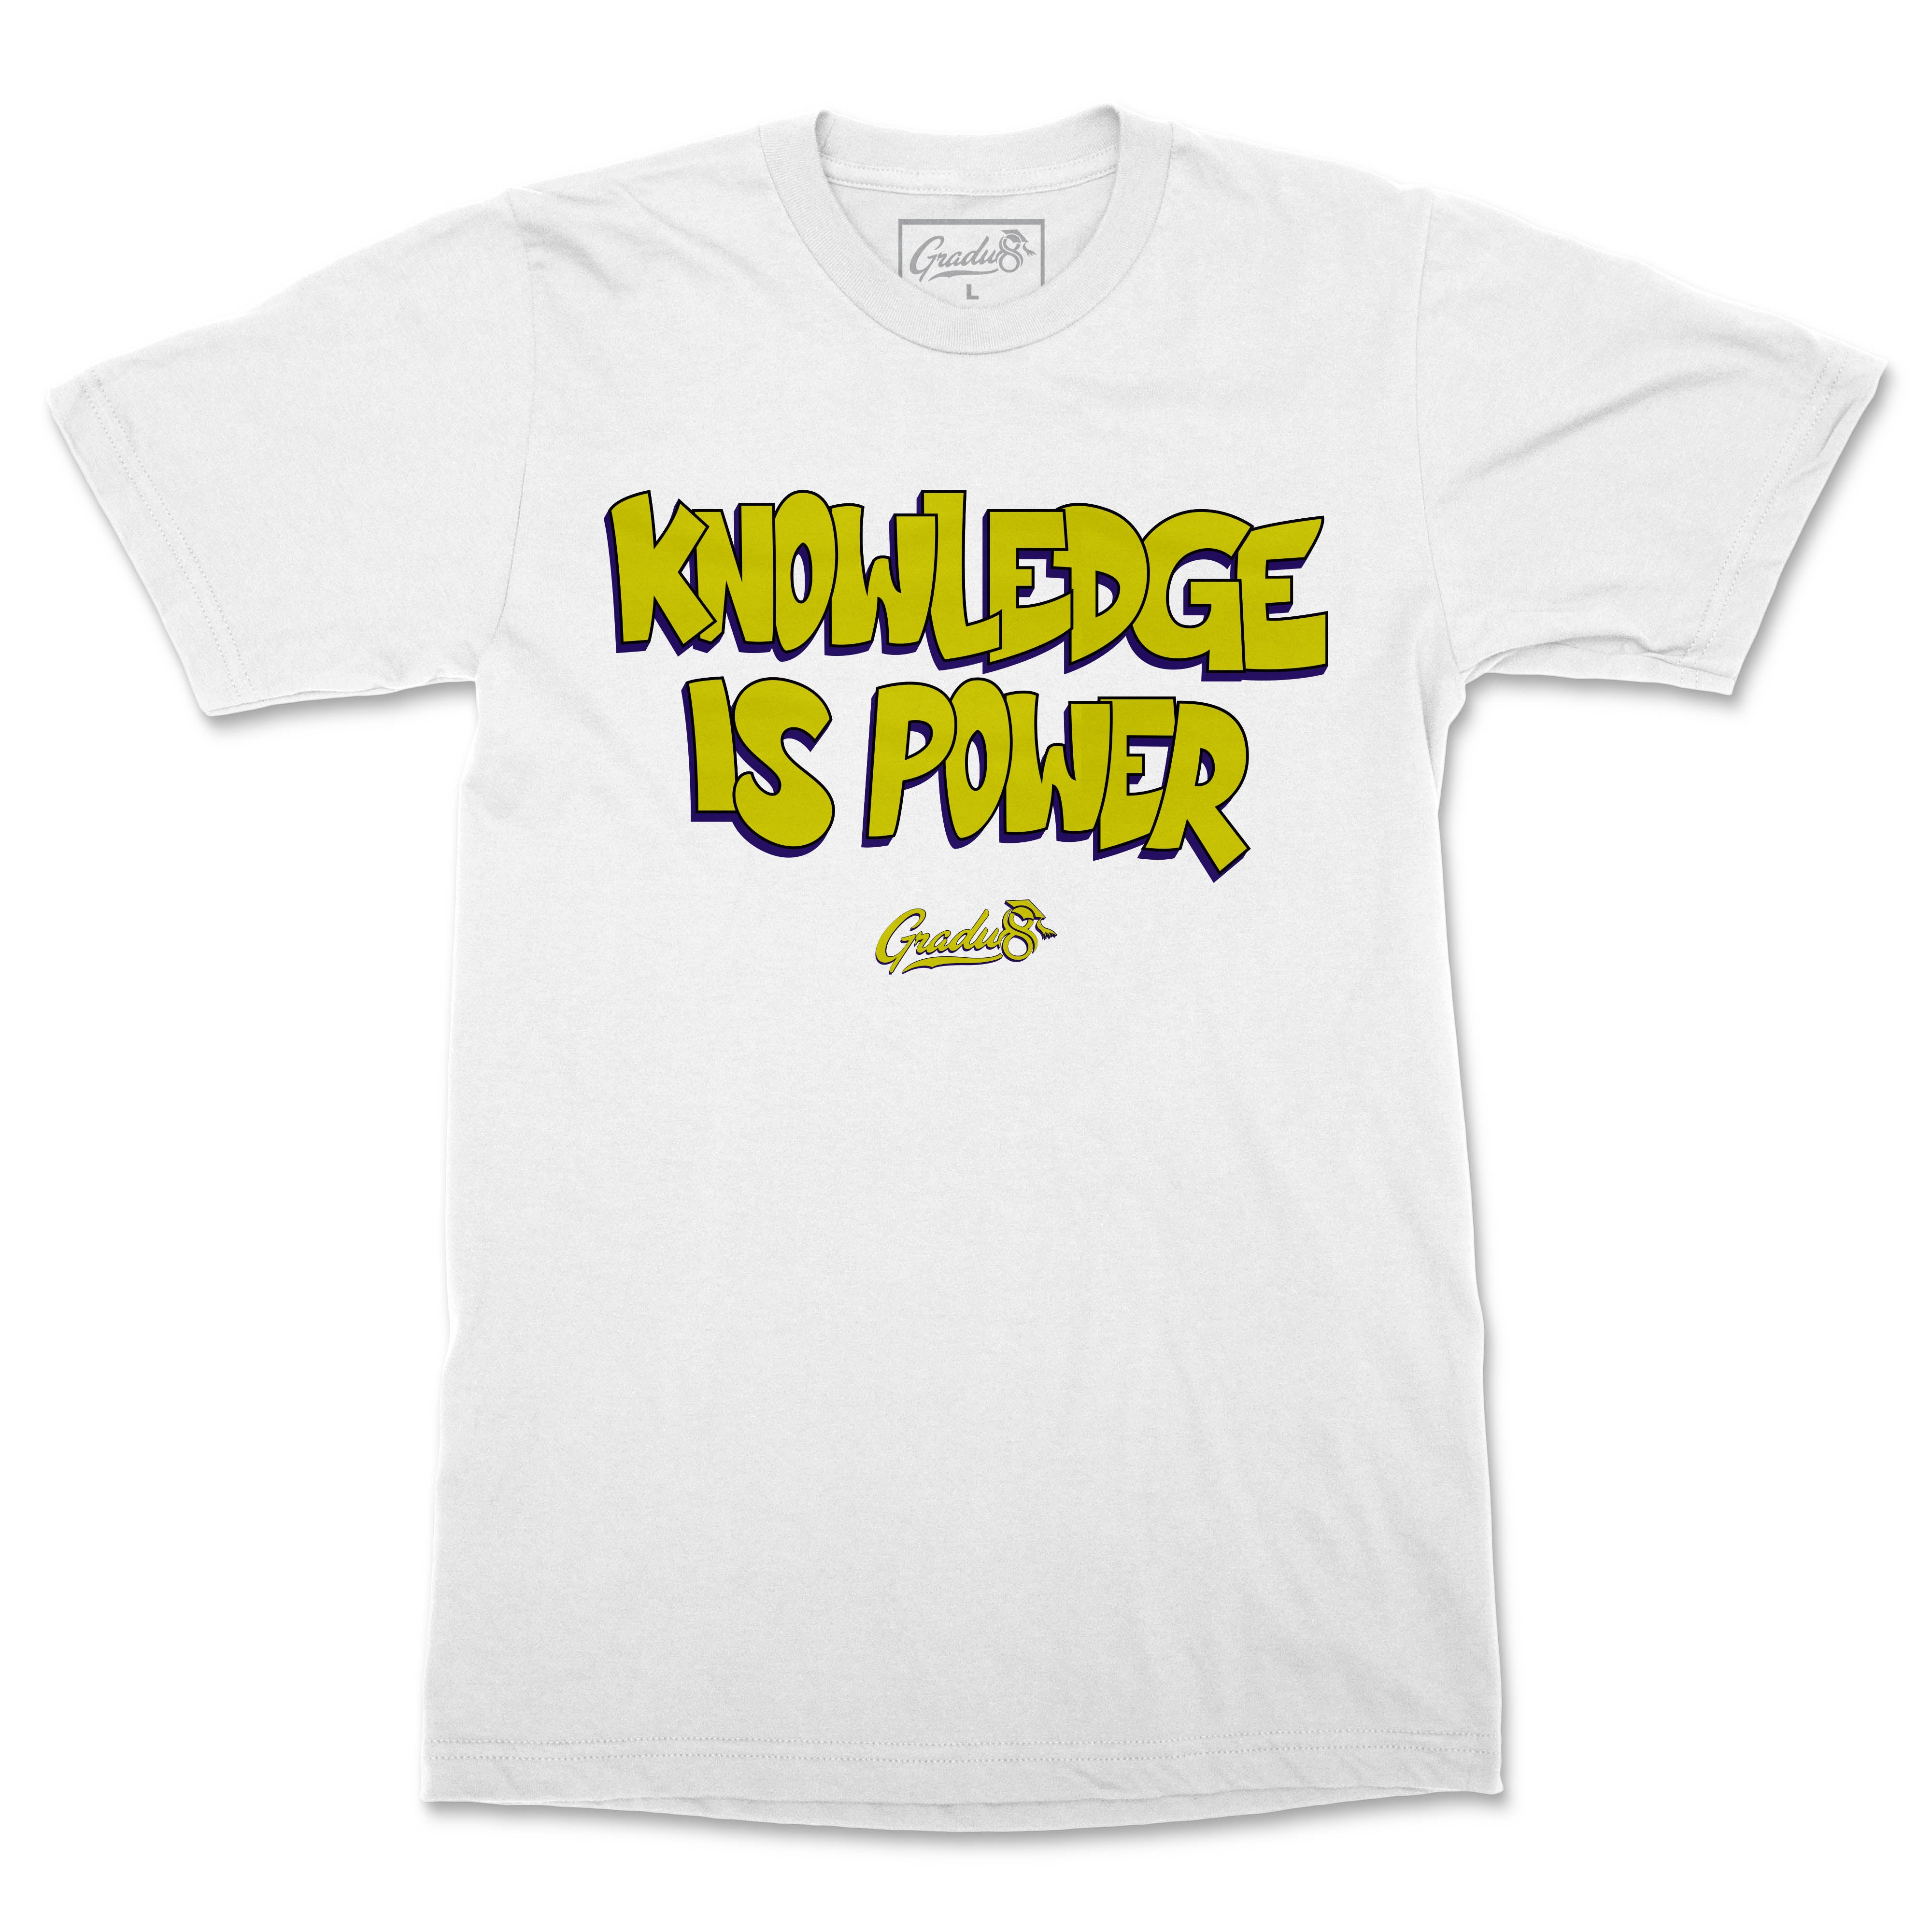 Knowledge Is Power Premium T-shirt - White